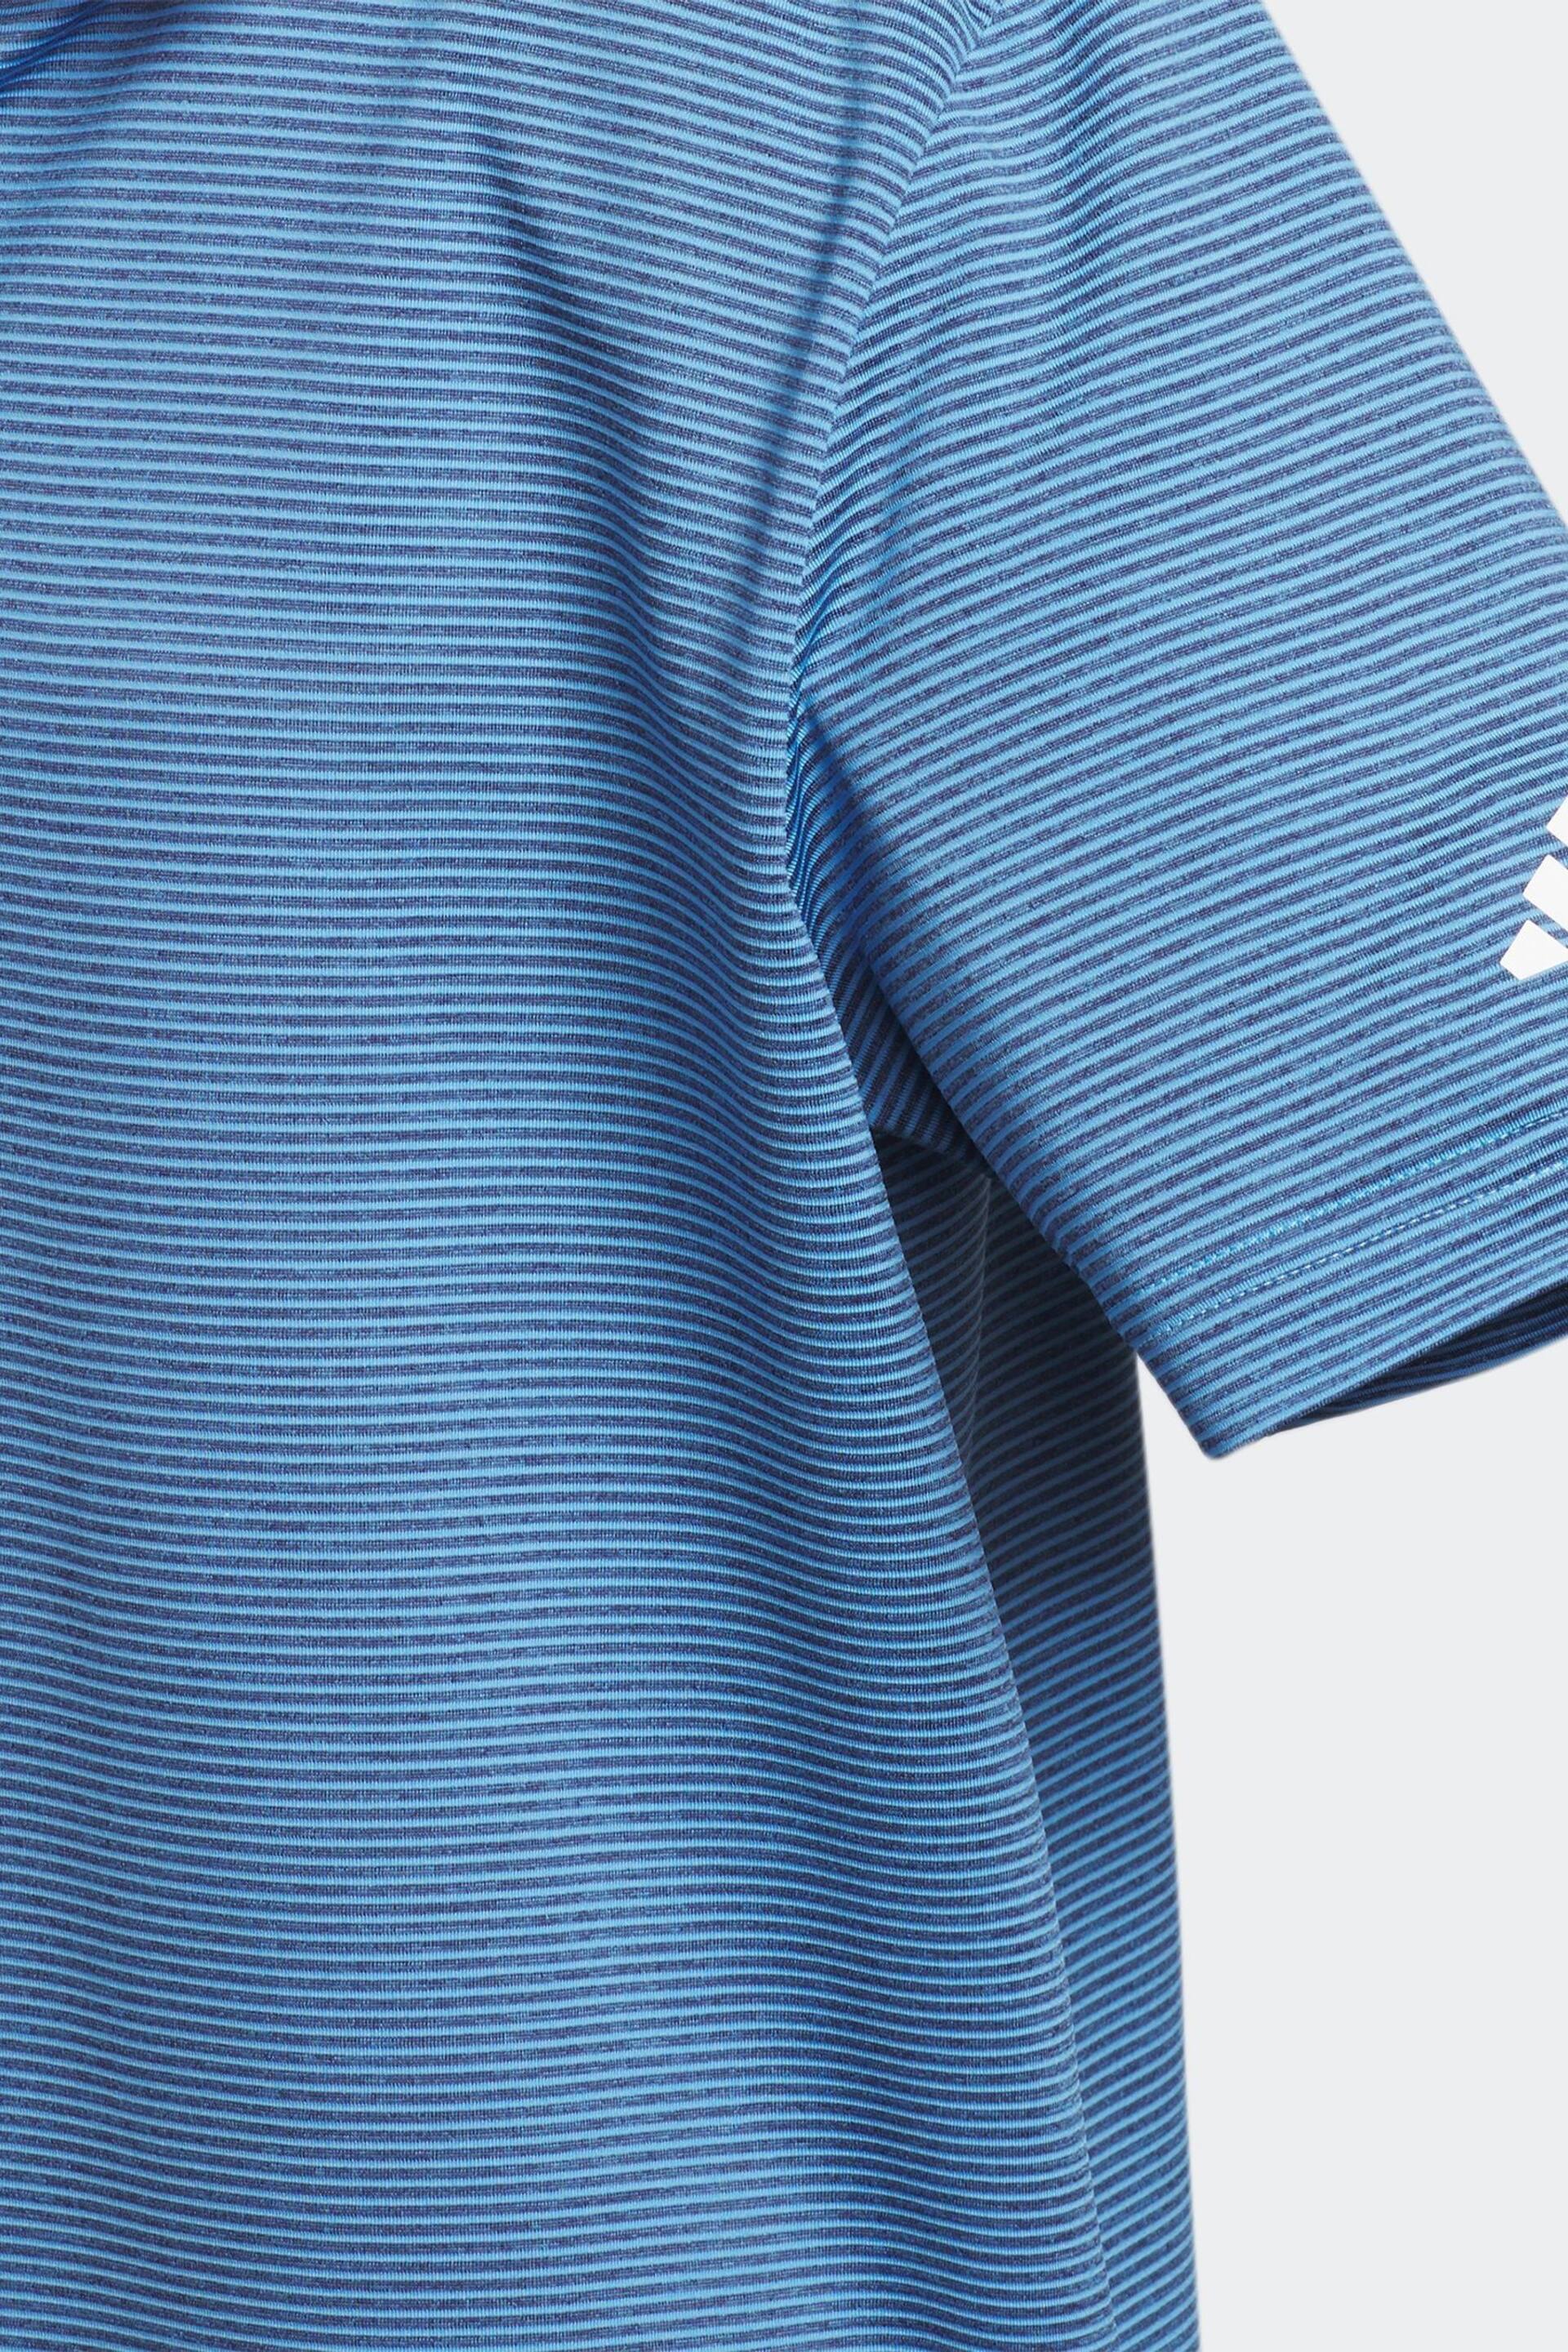 adidas Golf Striped Polo Shirt - Image 3 of 5